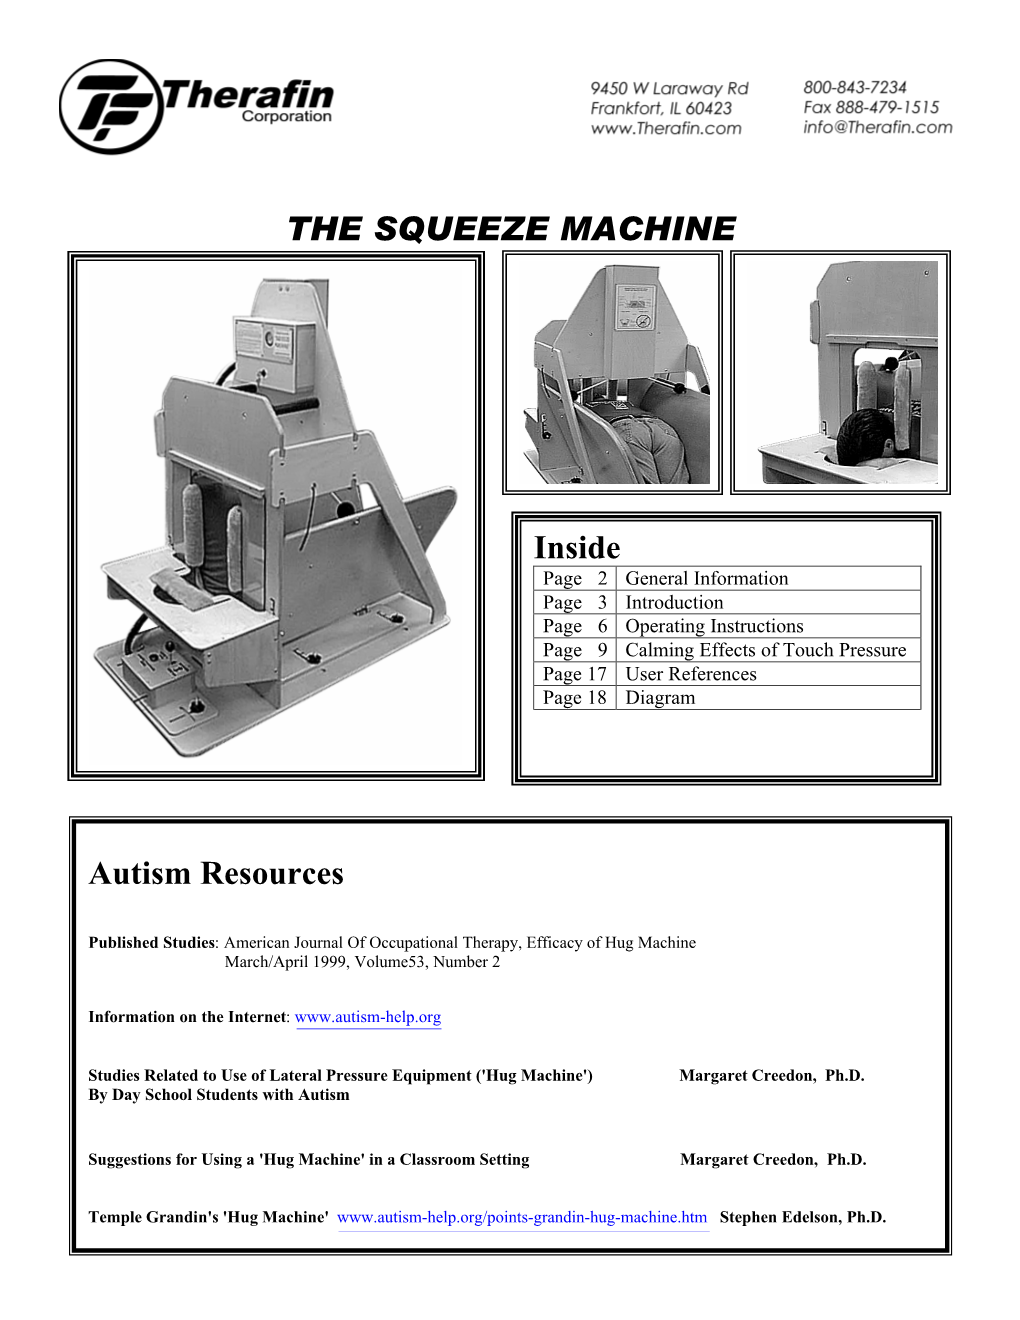 Squeeze Machine Indepth Information